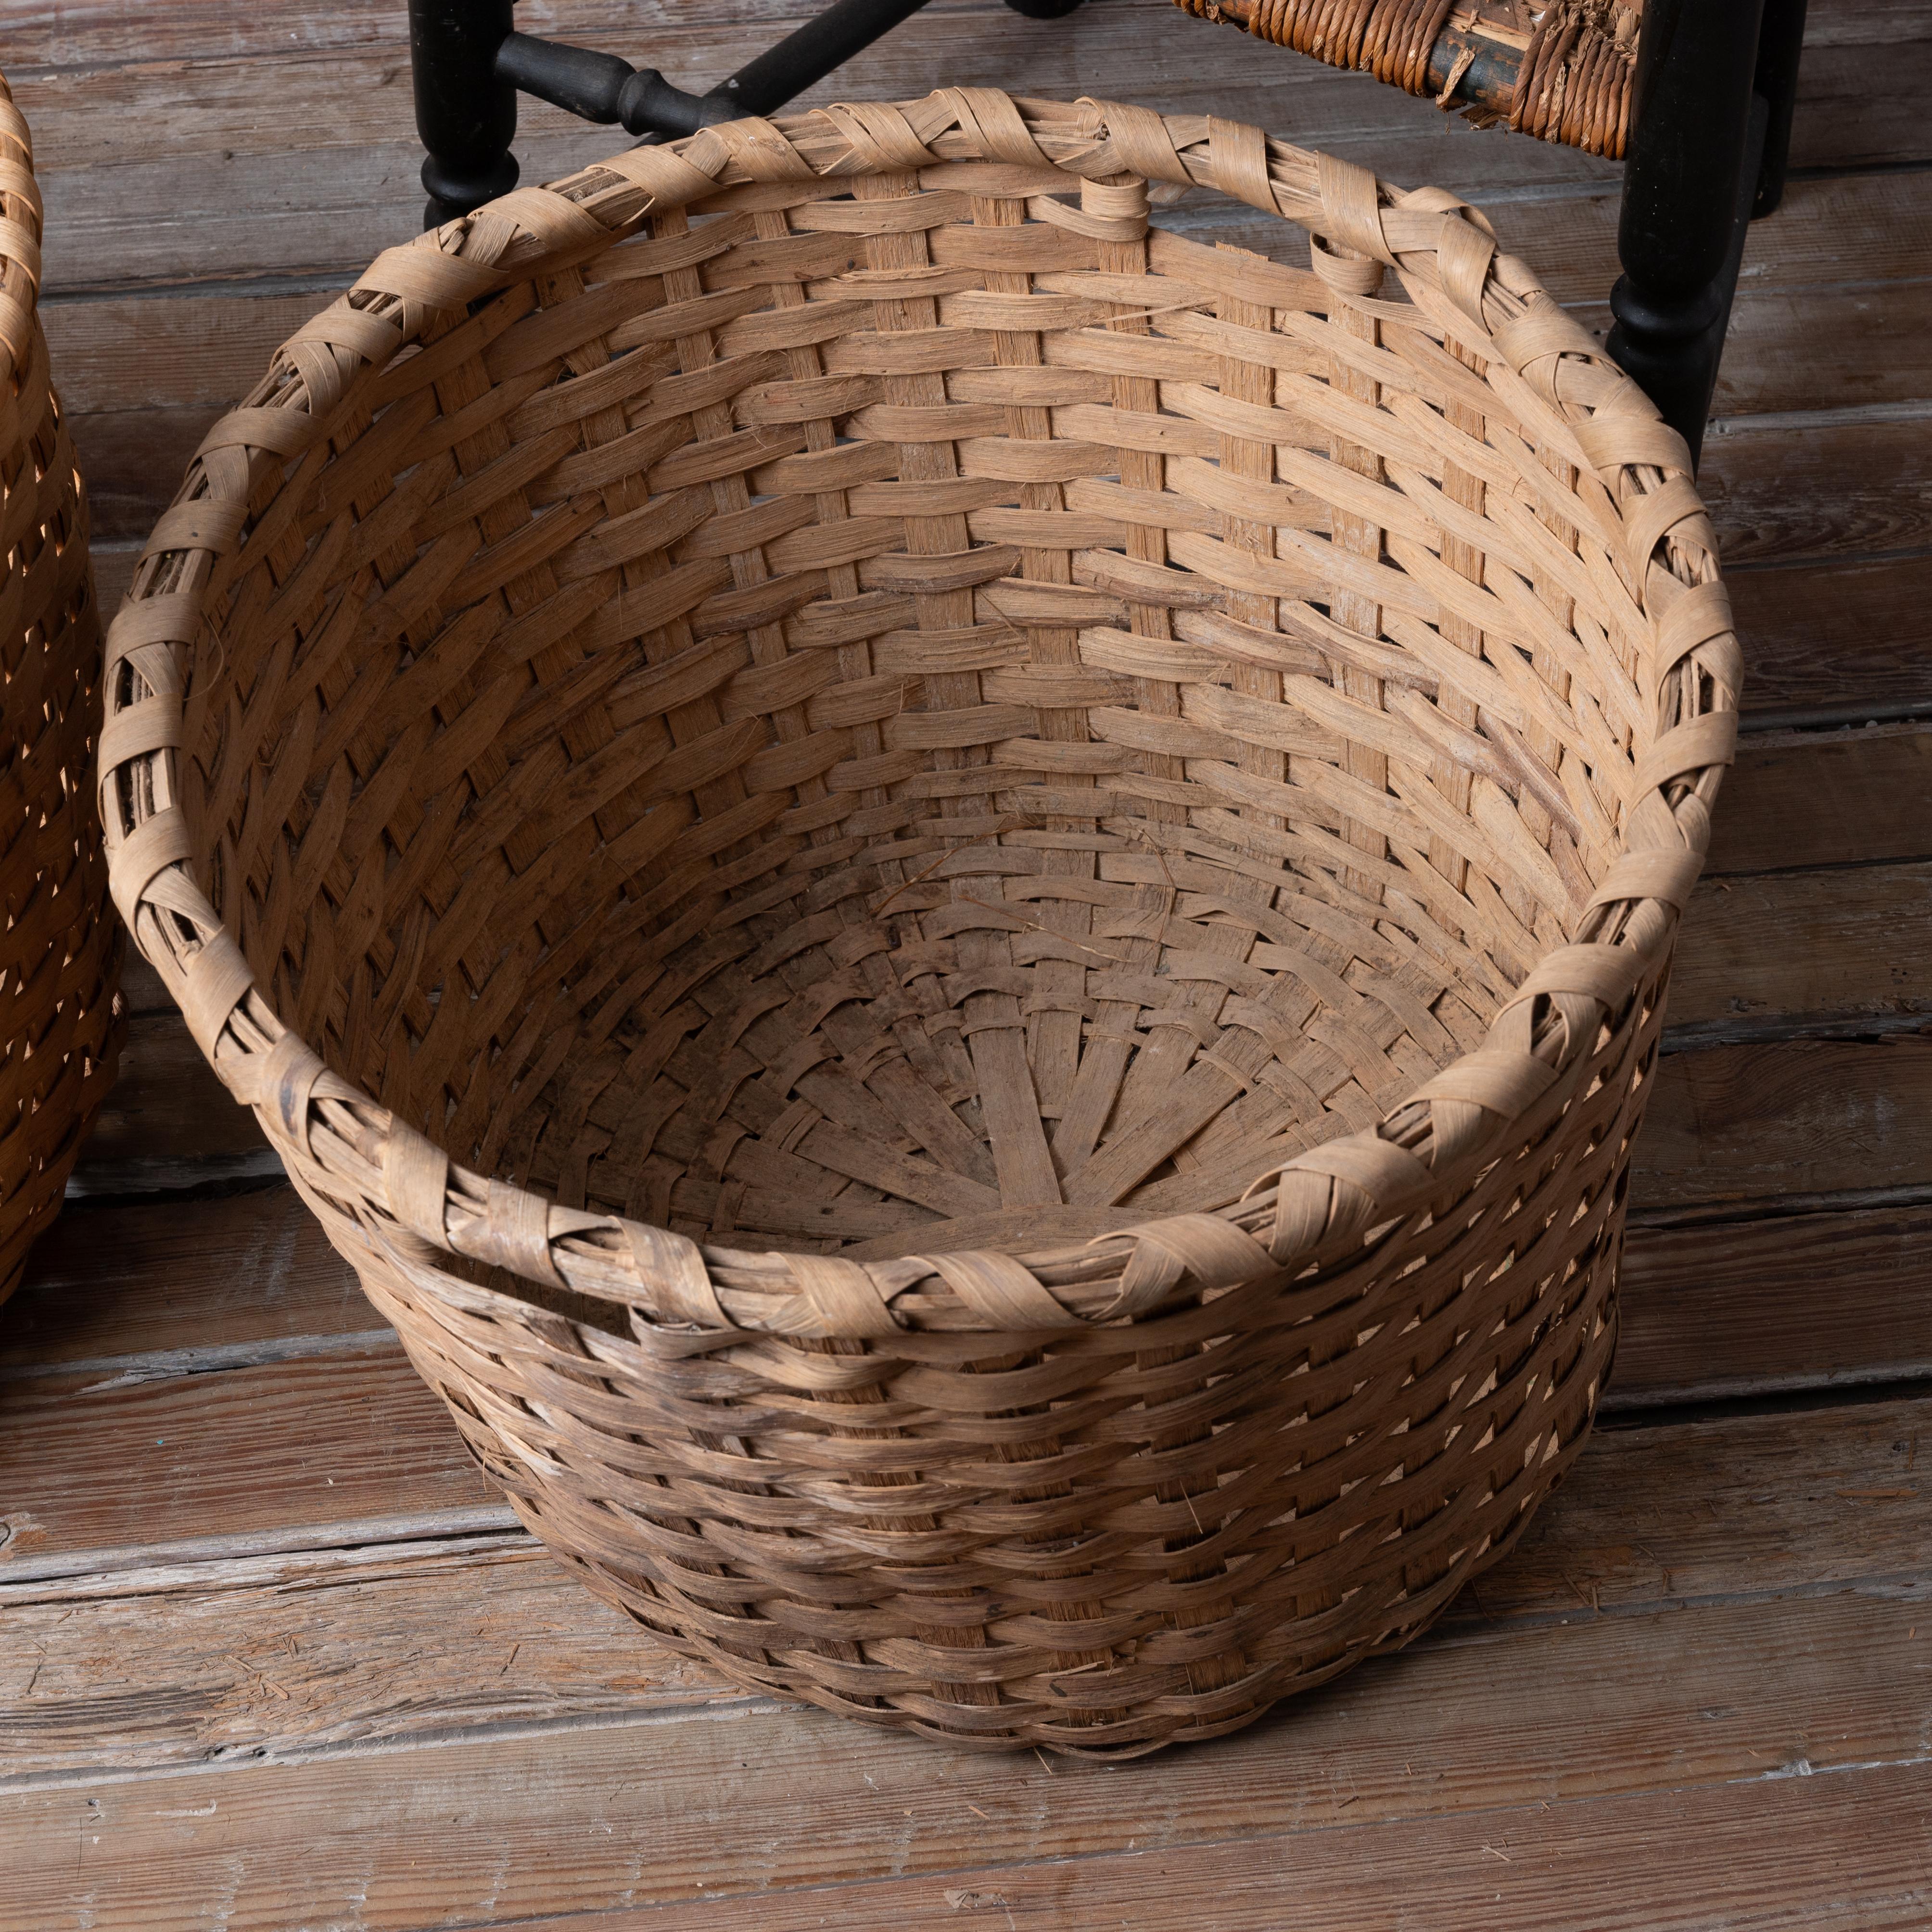 Oak South Georgia Cotton Picking Baskets - A Pair For Sale